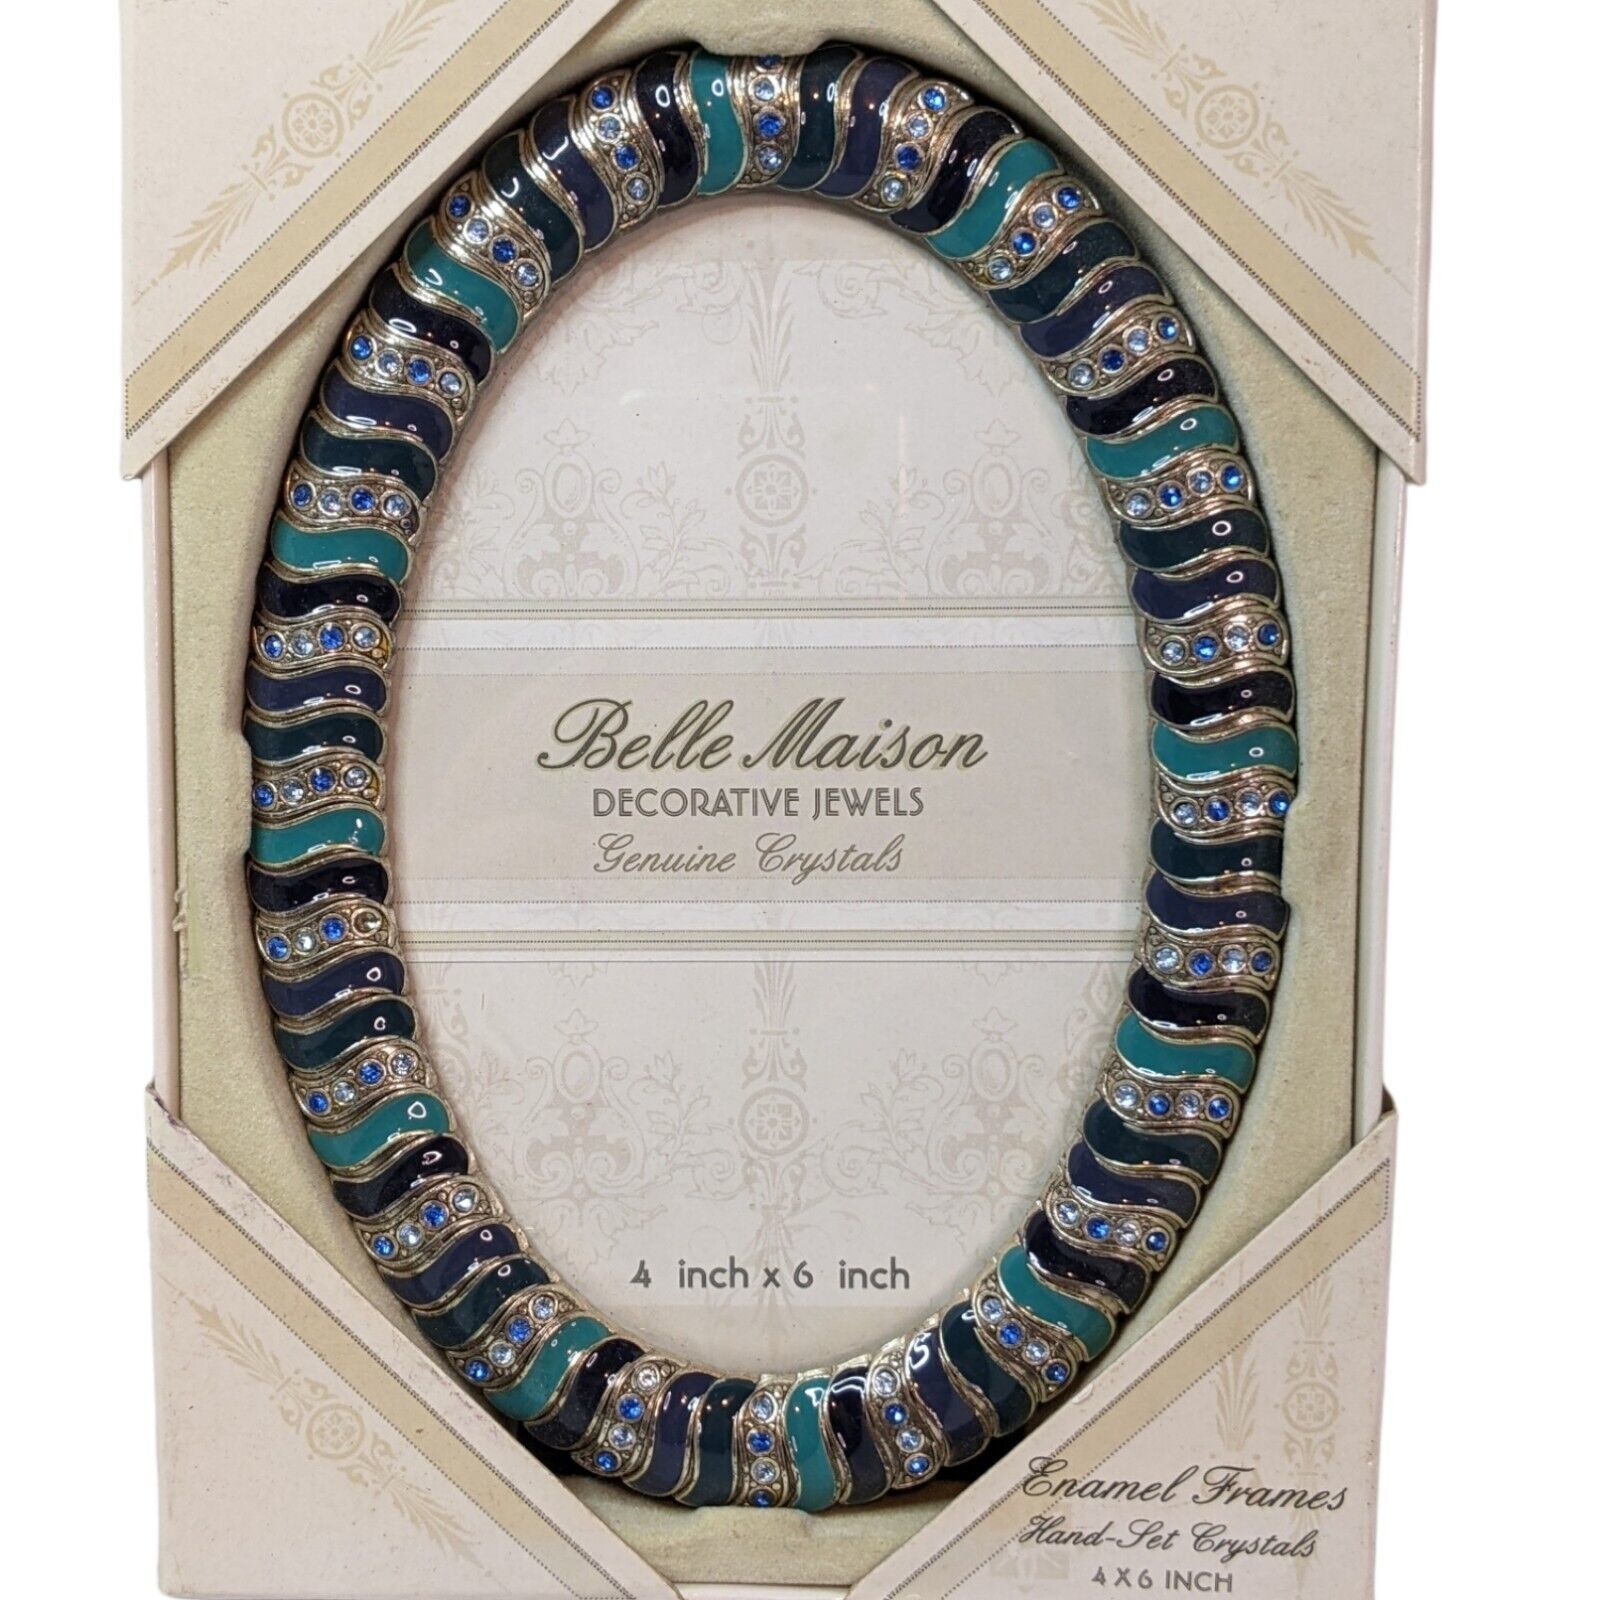 NIB Belle Maison Decorative Jewels Enamel Picture Frame Oval Blue 4x6 Kohls - $14.96